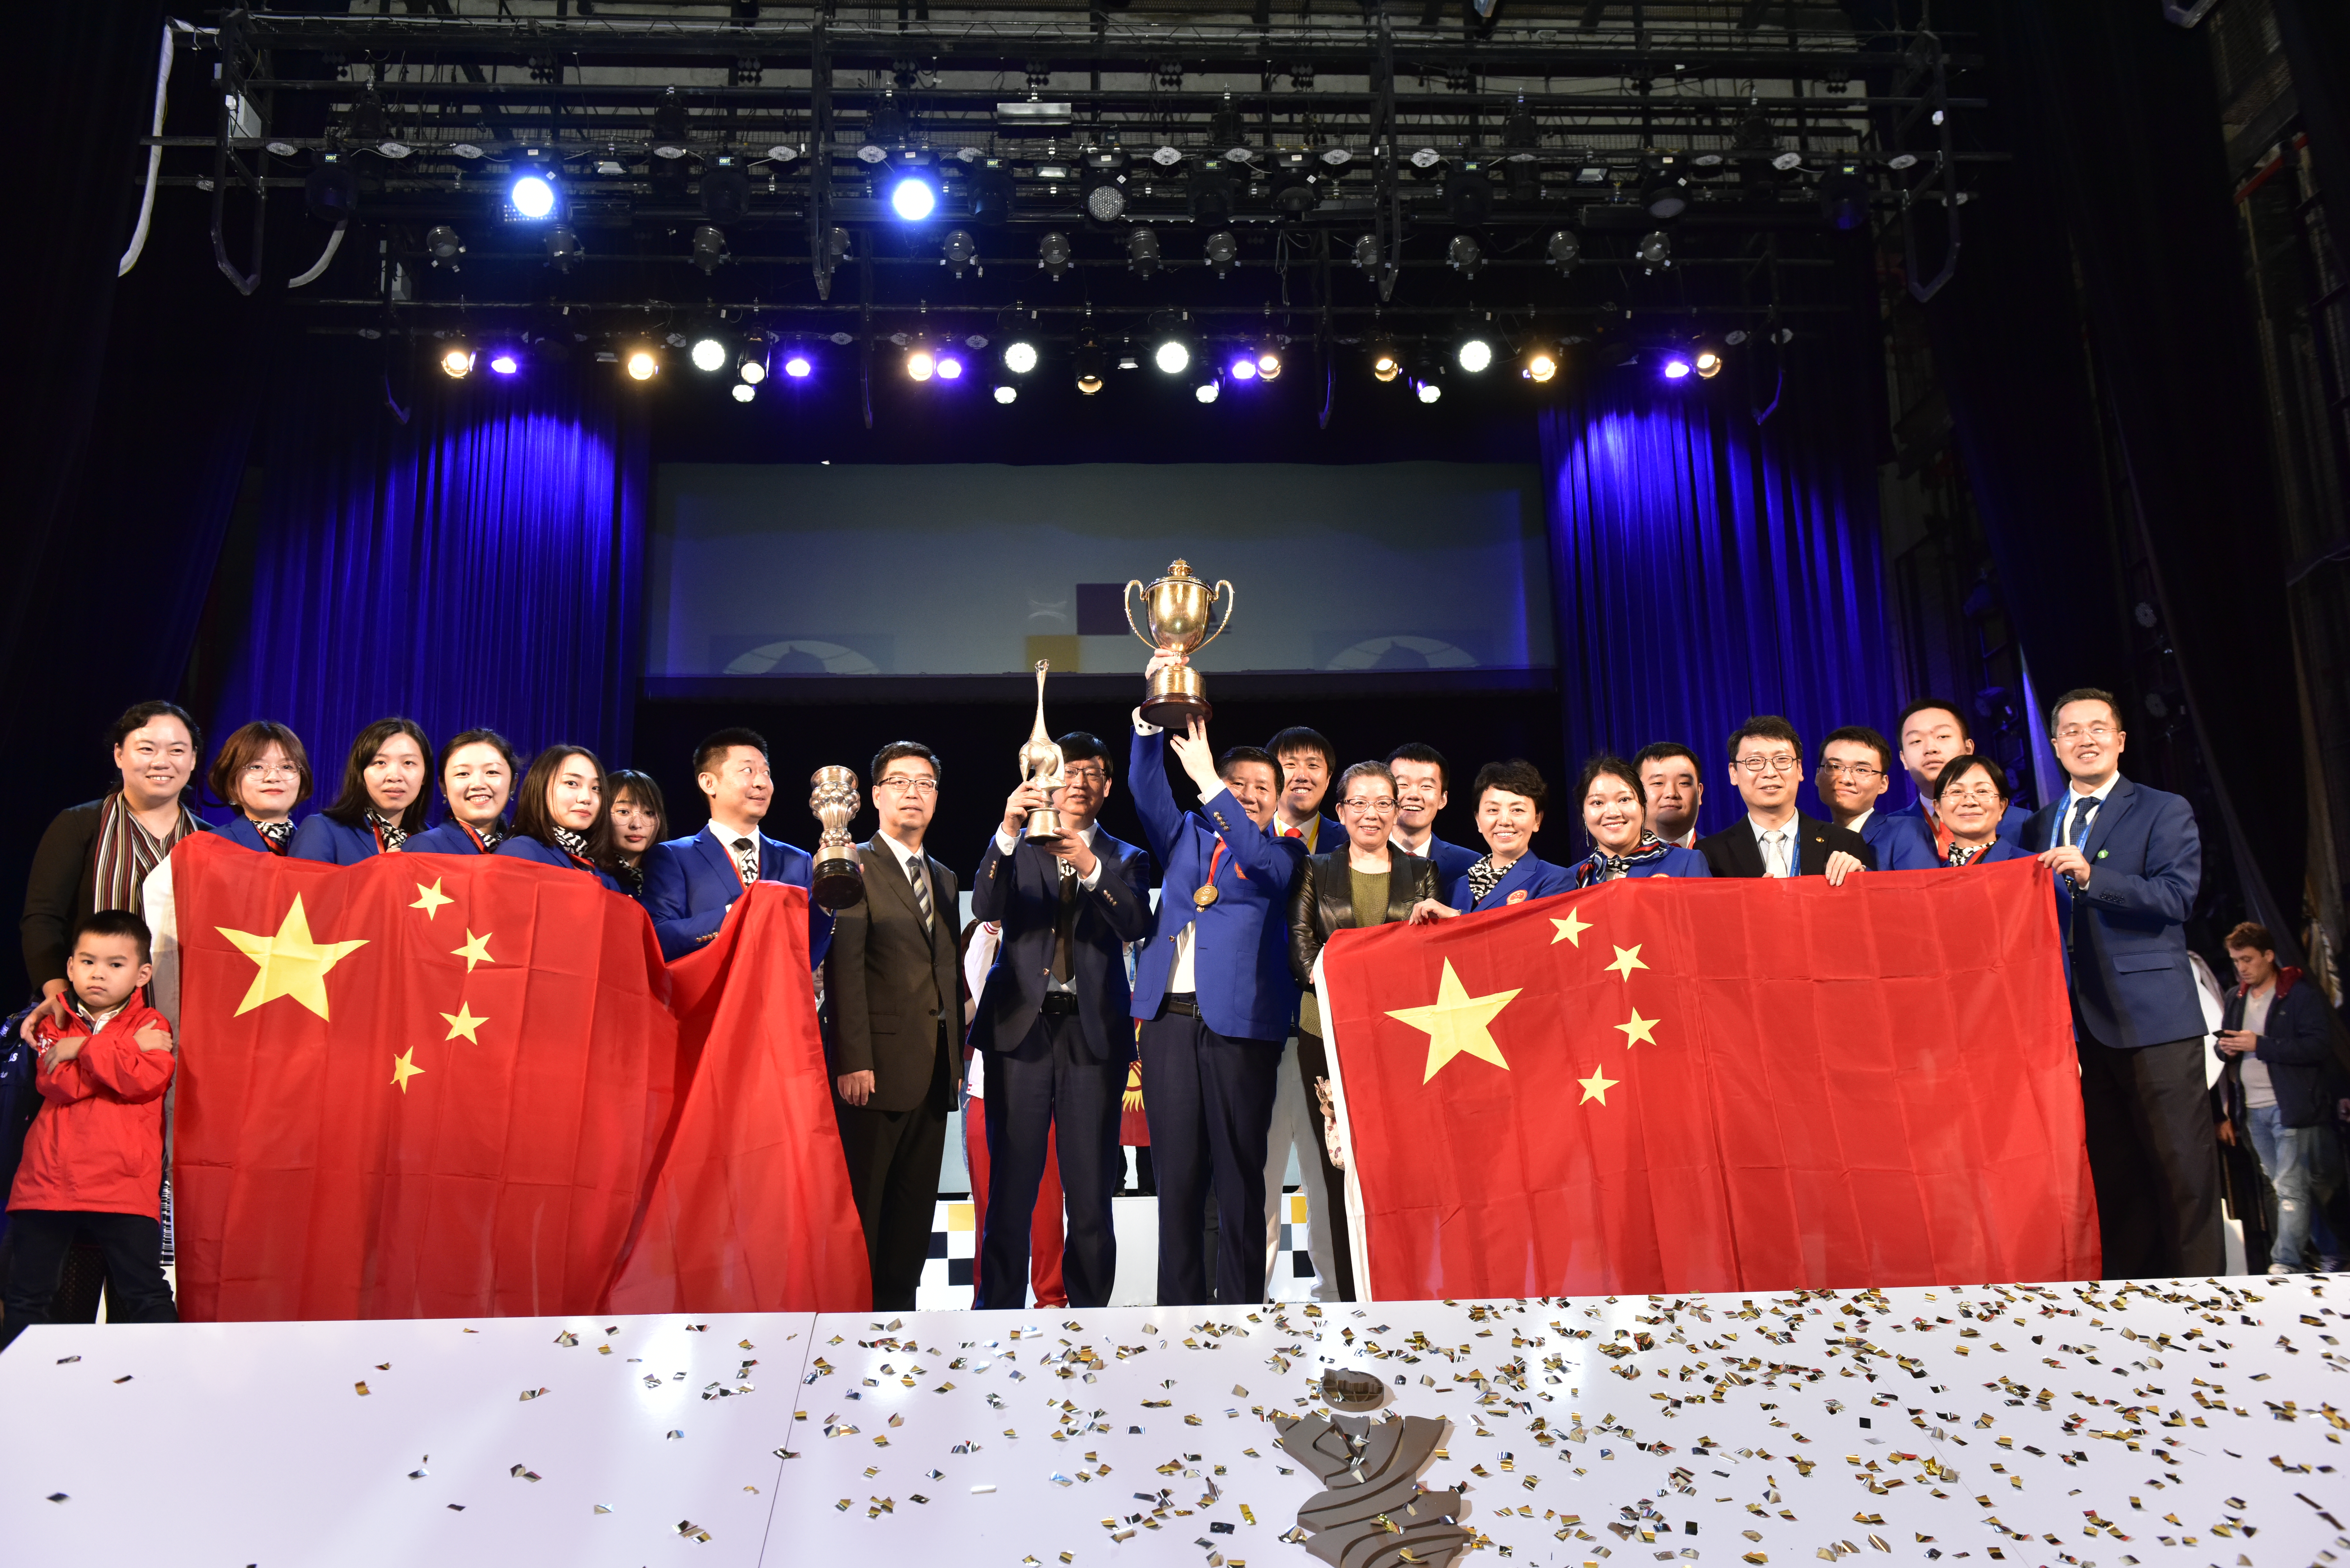 Olympiade Batumi: China Doppelolympiasieger, Deutschland Platz 13